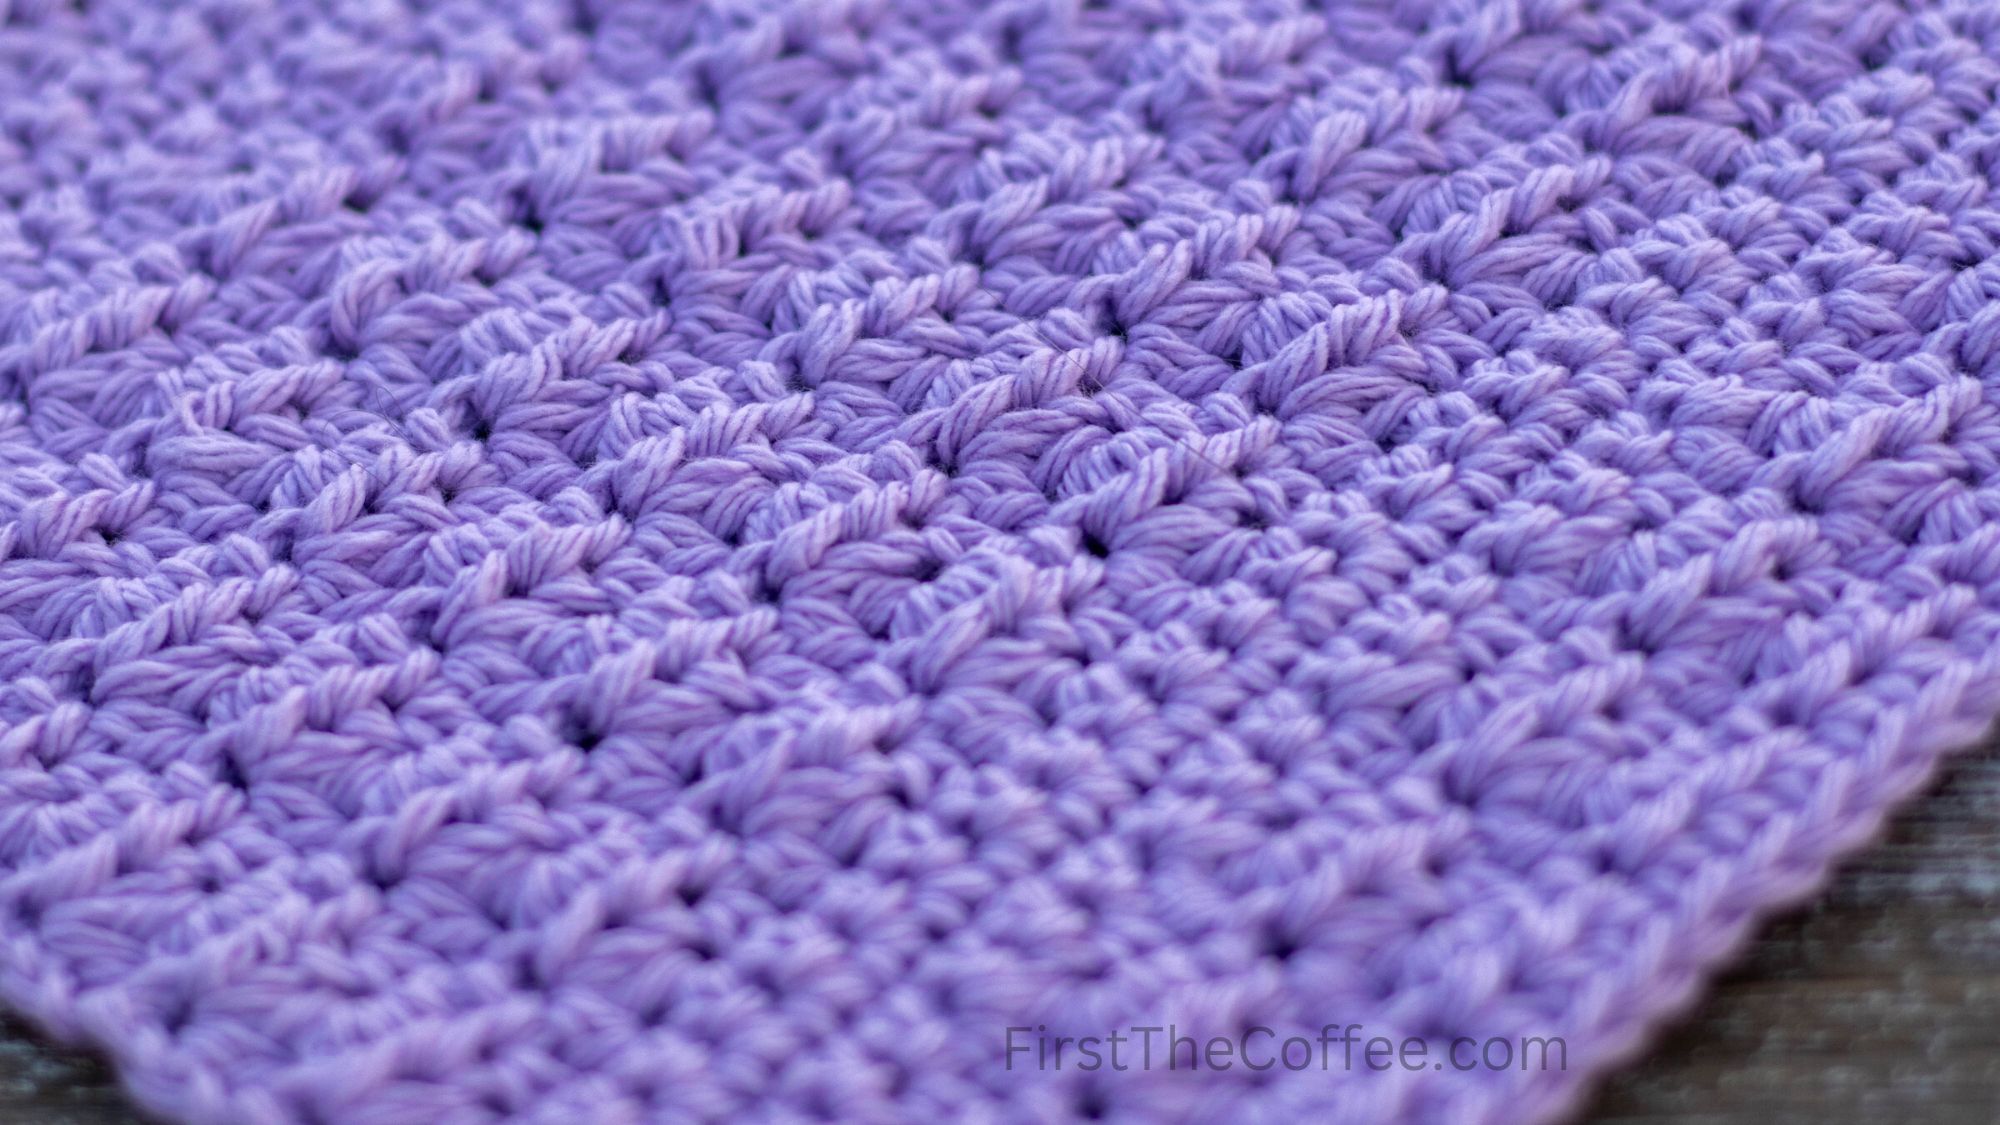 Cloudy Days Crochet Dishcloth